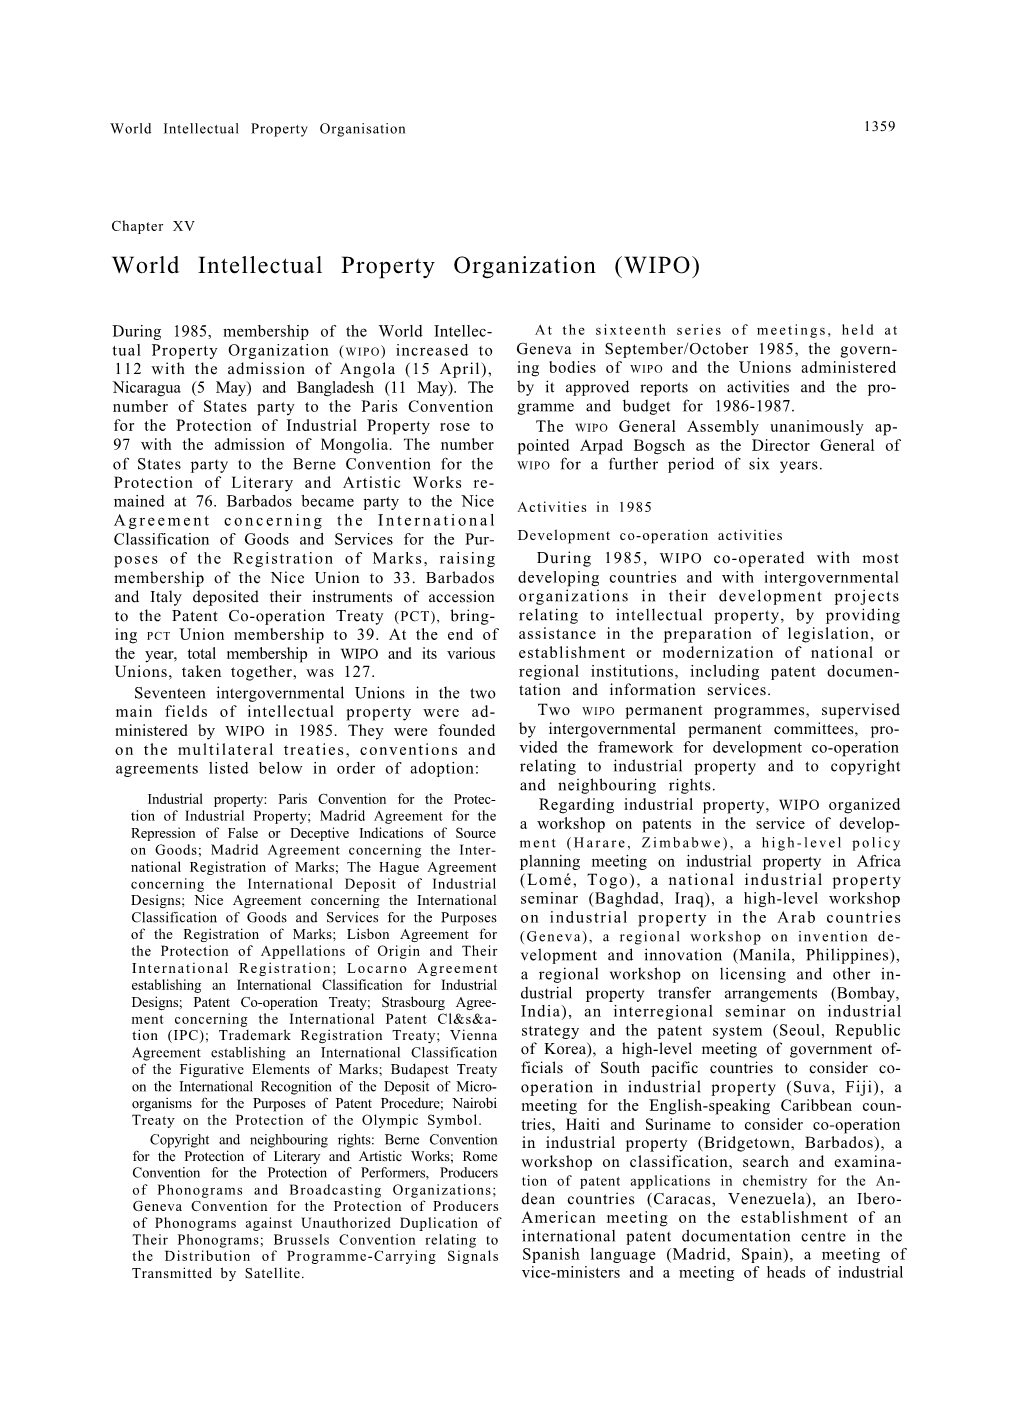 [ 1985 ] Part 2 Chapter 15 the World Intellectual Property Organization